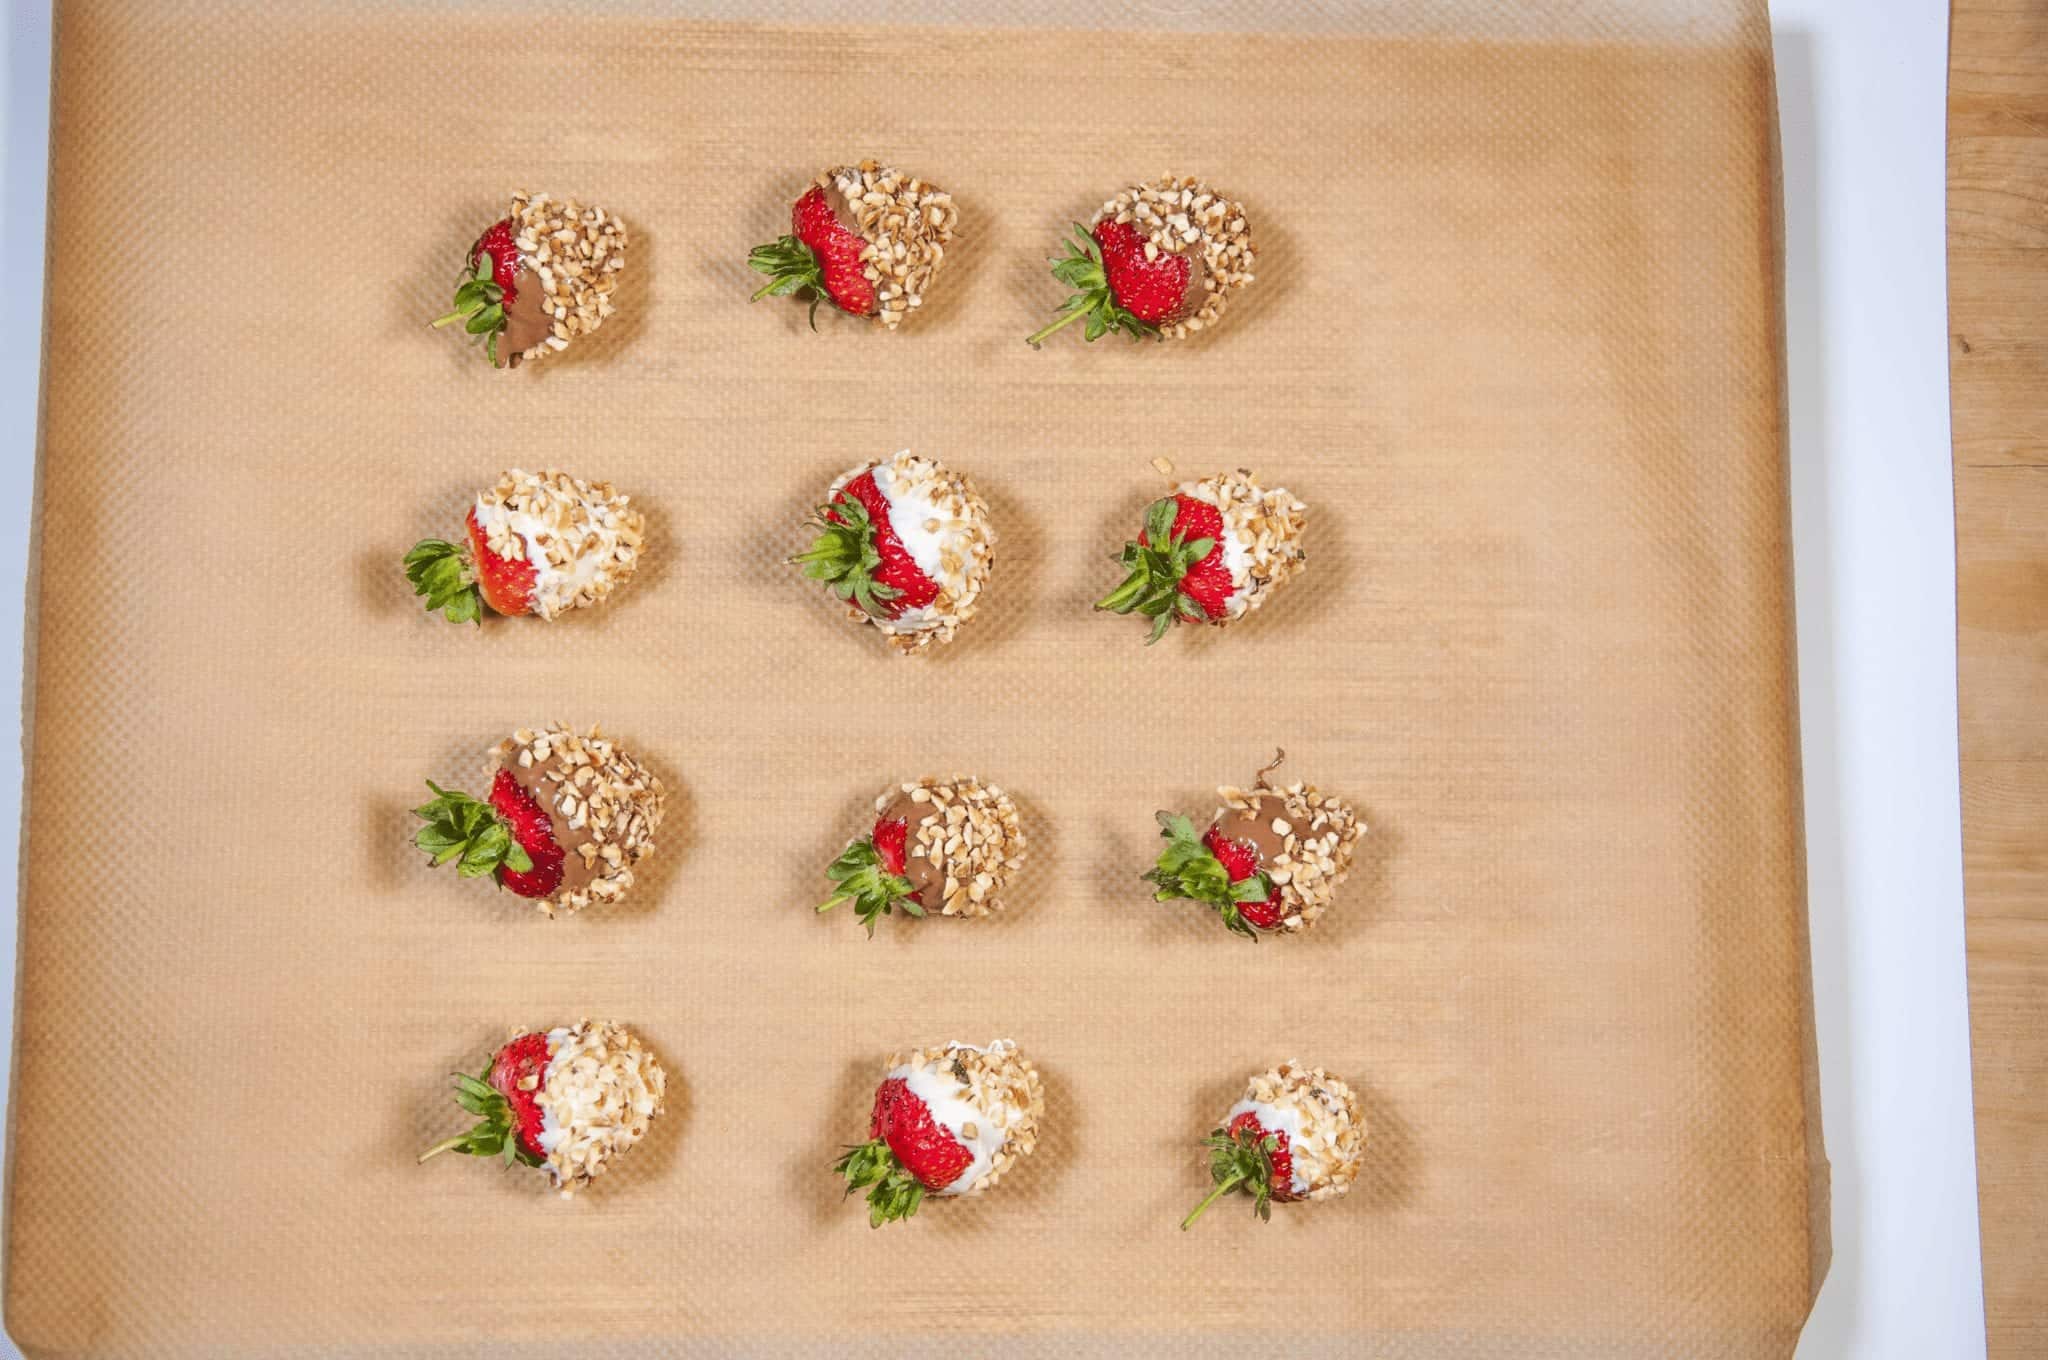 Hazelnut and chocolate smothered strawberries | https://theyumyumclub.com/2019/05/21/hazelnut-chocola…red-strawberries/